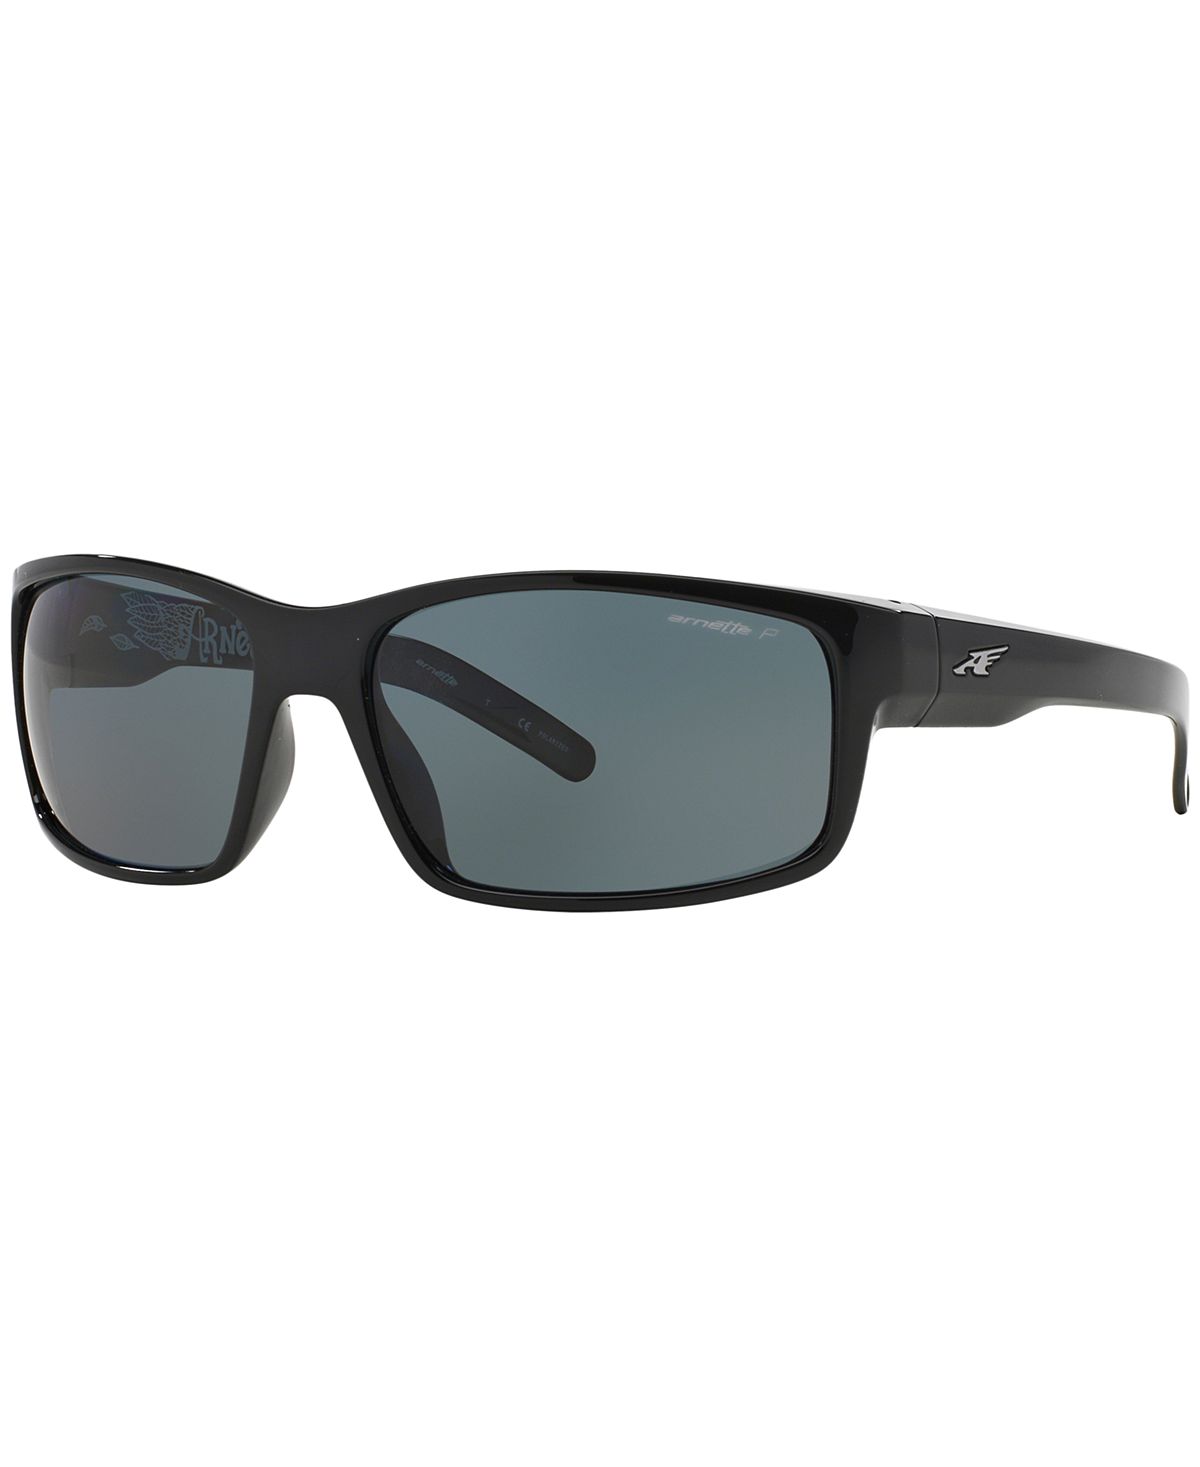 Поляризованные солнцезащитные очки AN4202 Fastball Arnette